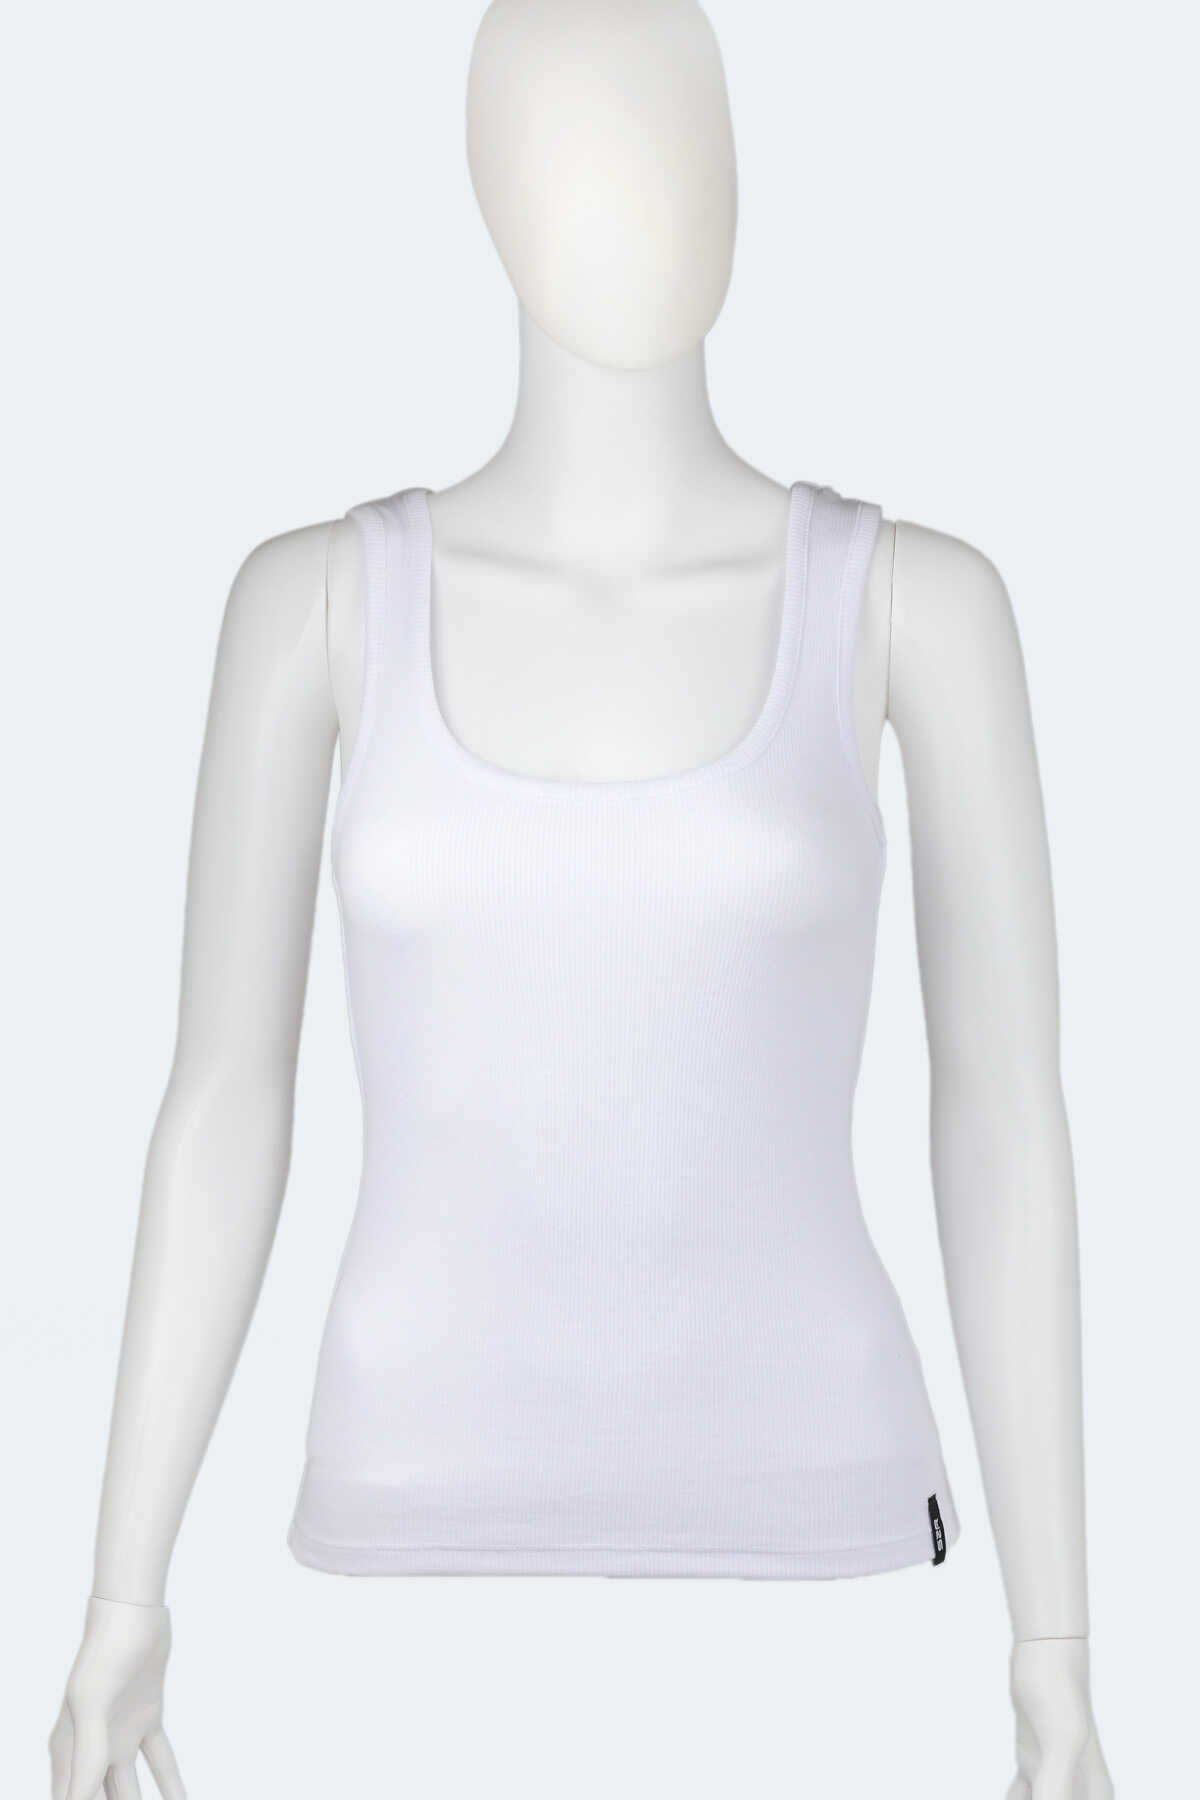 Slazenger - Slazenger PRESSURE Kadın Fitness T-Shirt Beyaz